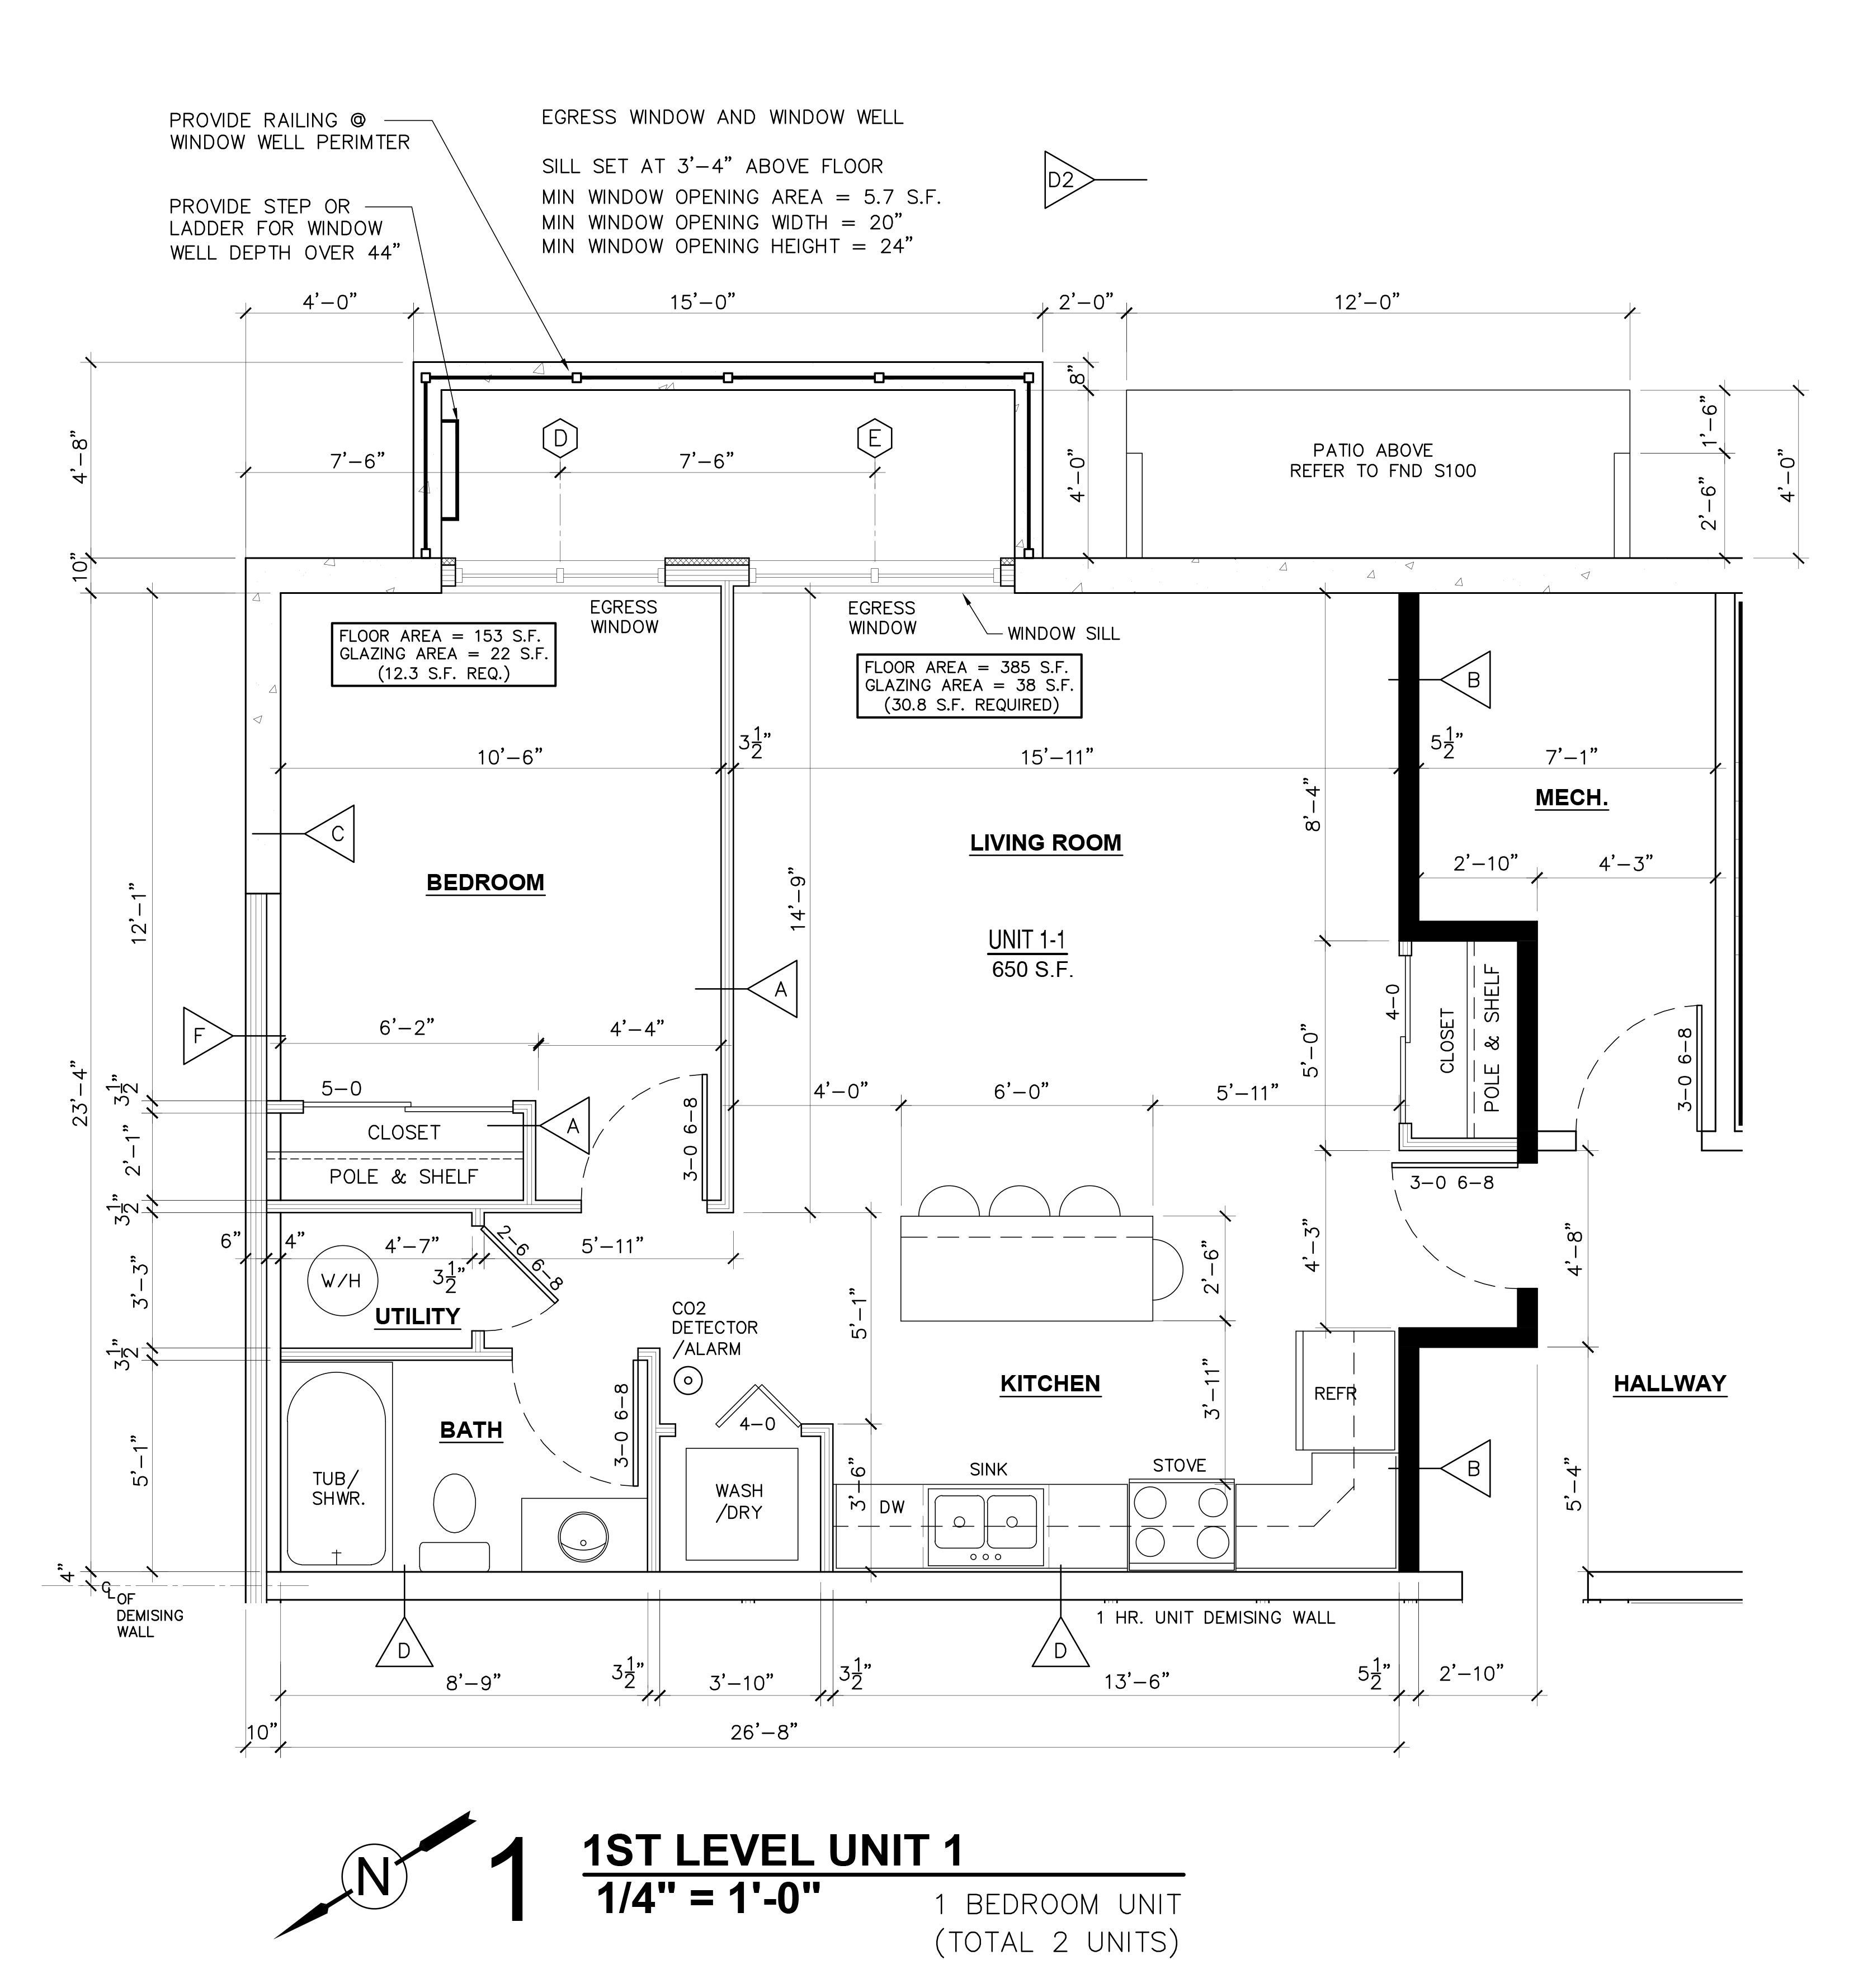 Hawks Nest Apartments 1st level Unit 1 floor plan